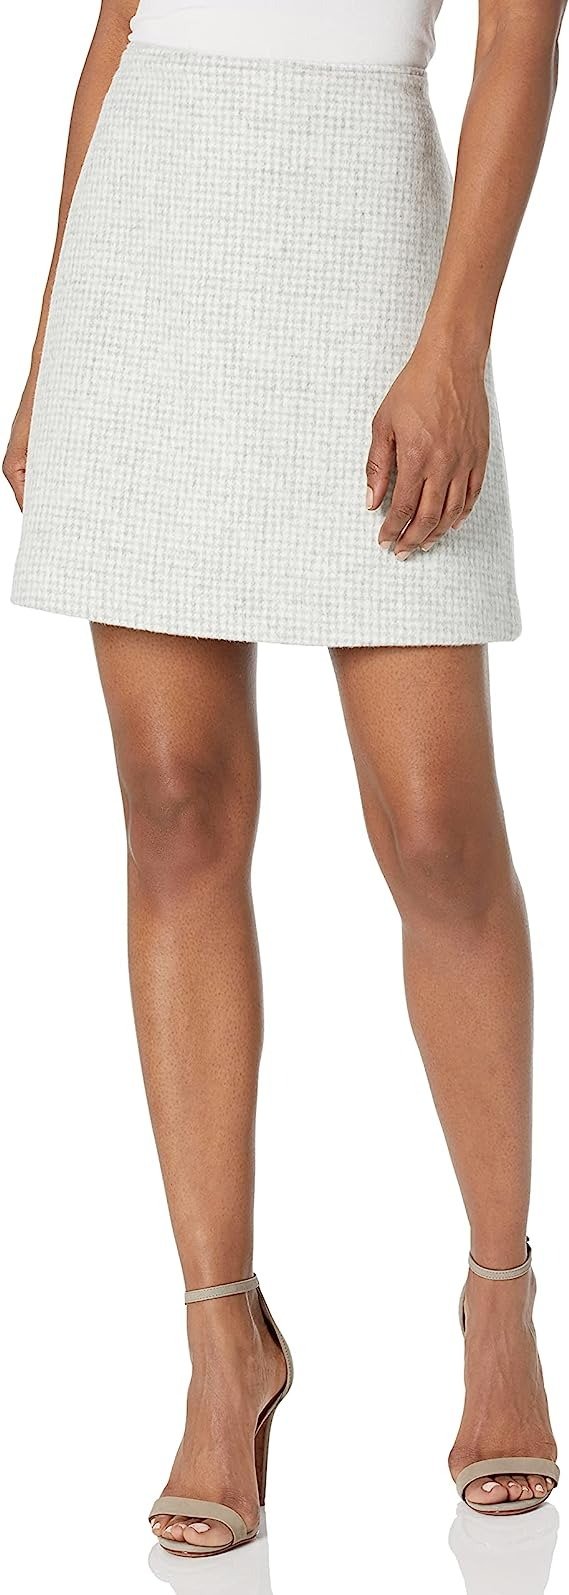 Women's Centie Skirt